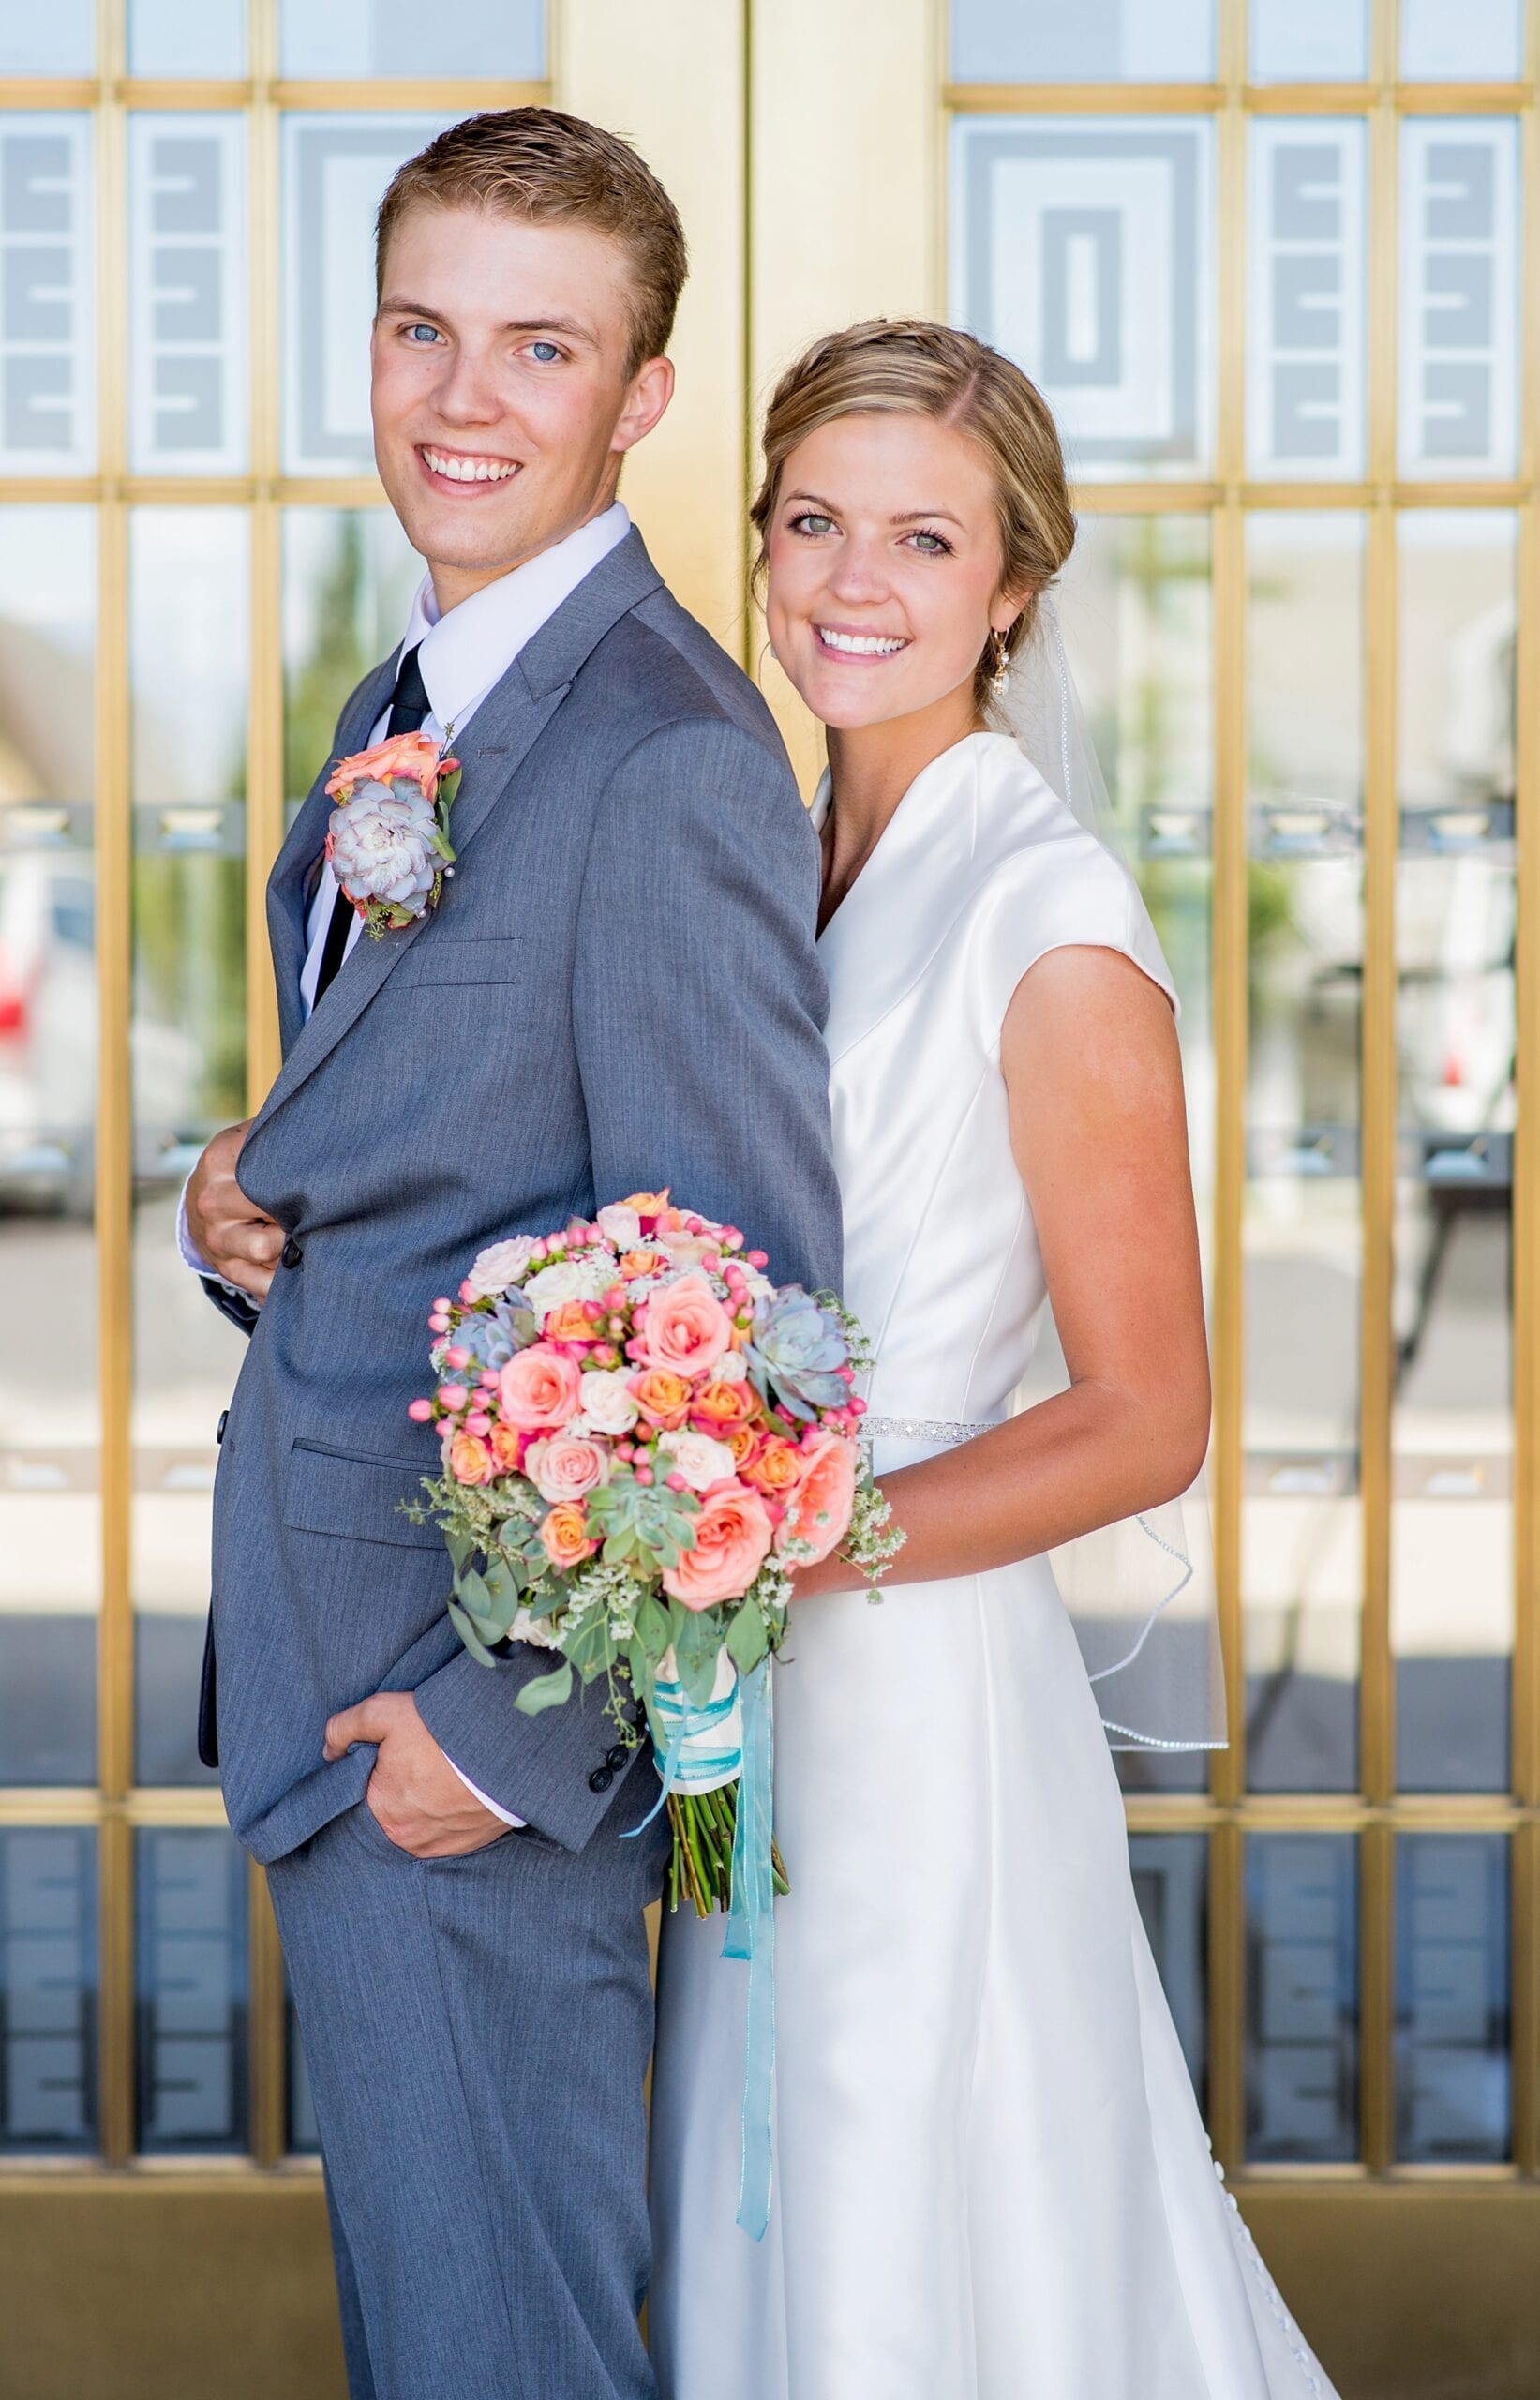 Draper LDS temple Wedding by Michelle & Logan Photo+Films